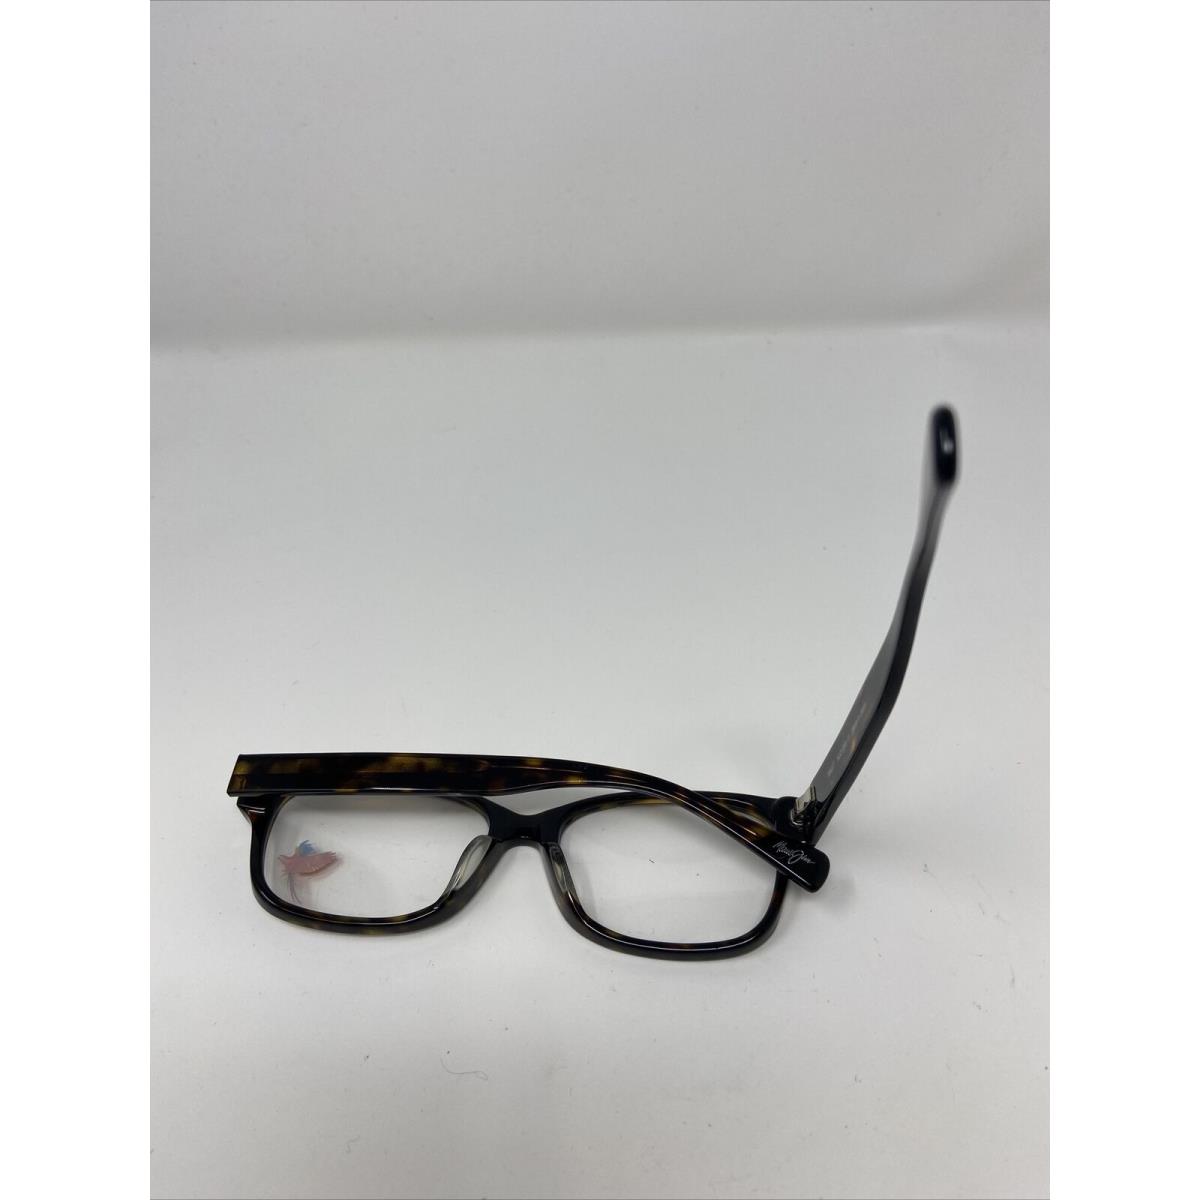 Maui Jim eyeglasses  - Brown Frame 6